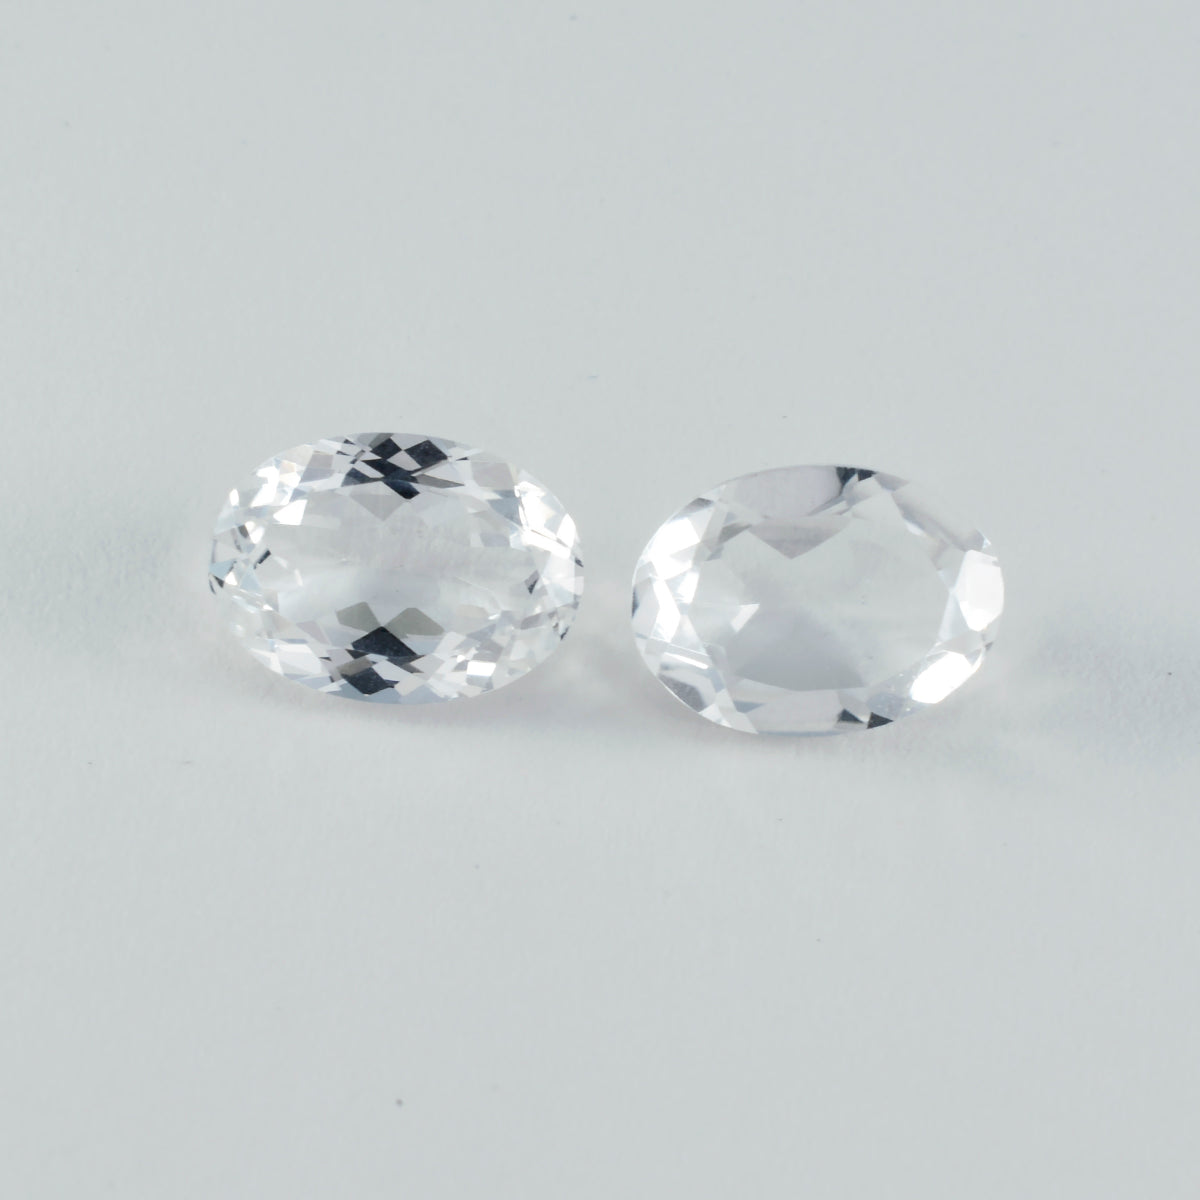 Riyogems 1PC White Crystal Quartz Faceted 10x12 mm Oval Shape pretty Quality Loose Gems